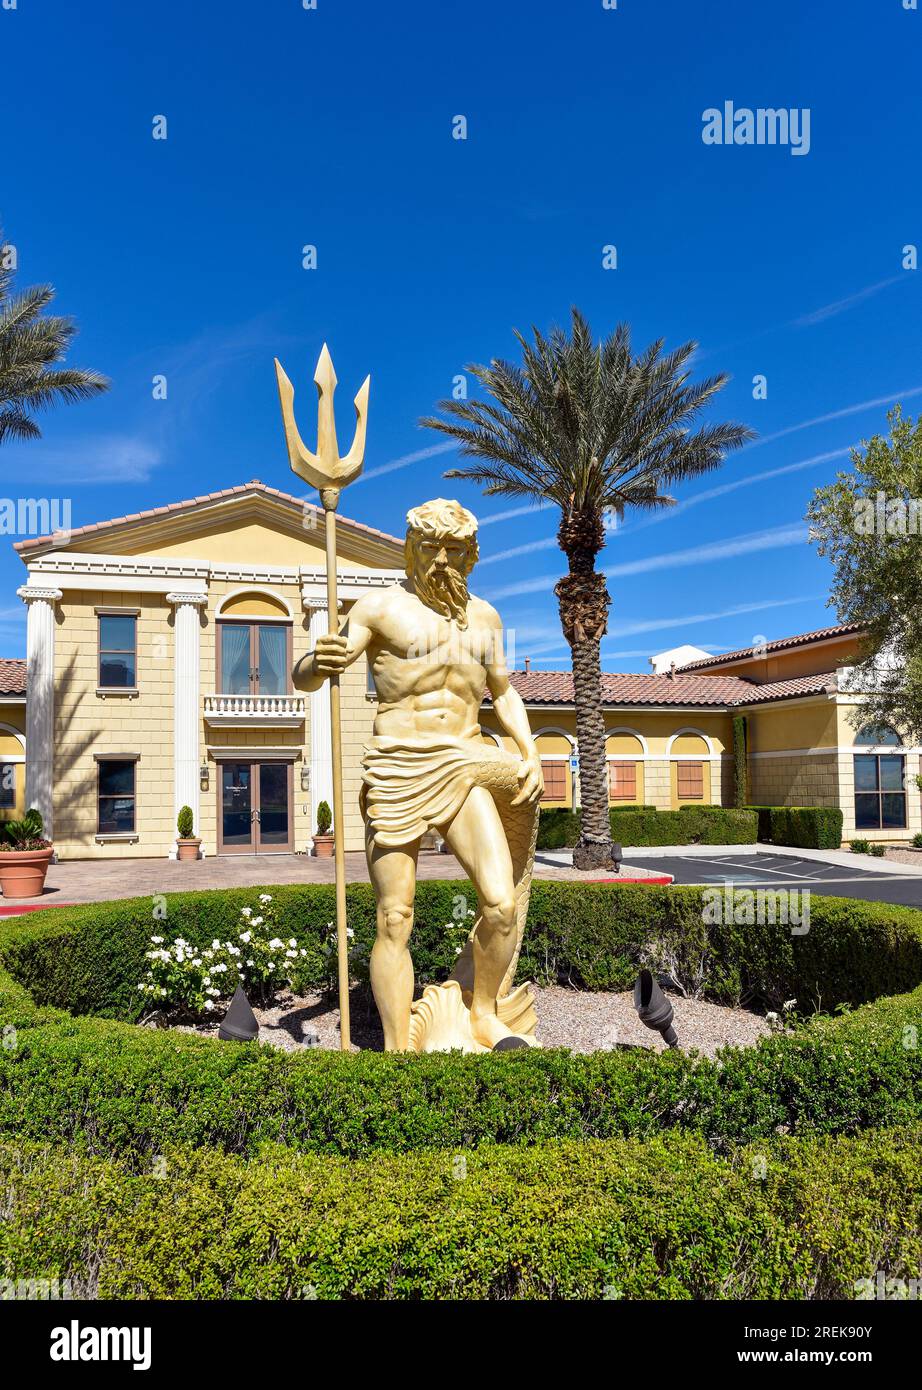 The Poseidon statue at Via Visione golf community club house at Lake Las Vegas, Nevada Stock Photo